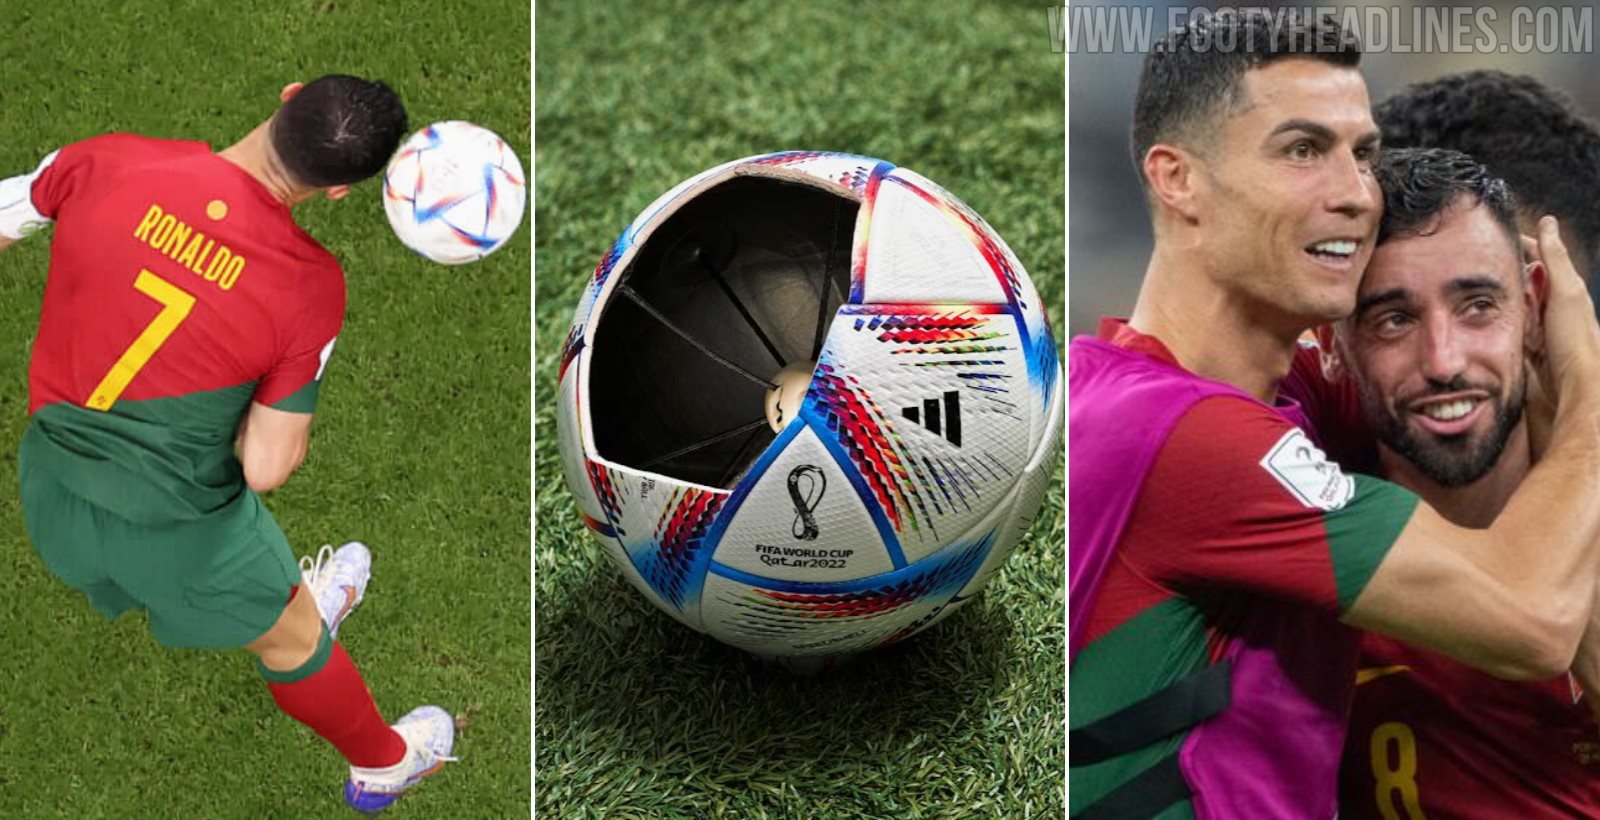 Scherm Specialiseren Instrument Adidas In-Ball Technology Denies Ronaldo Goal, Awards it to Bruno Fernandes  - Footy Headlines